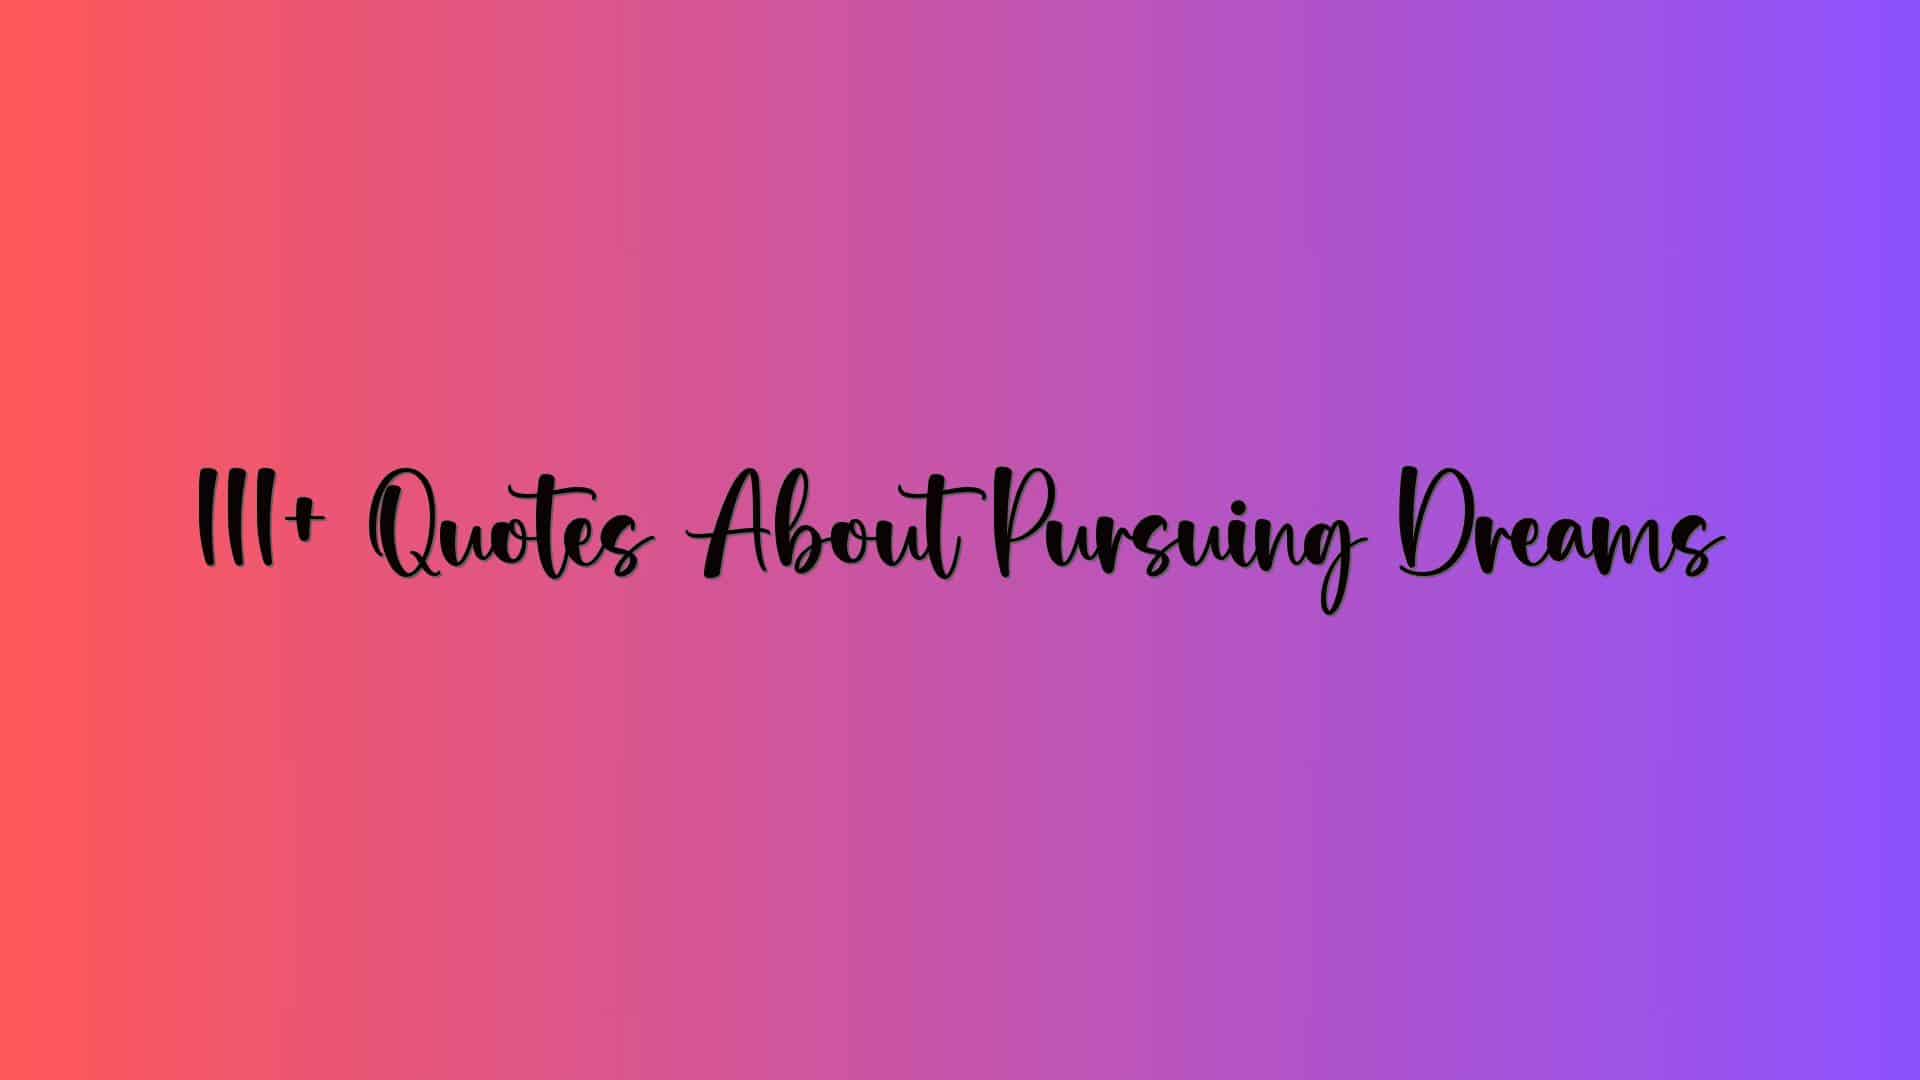 111+ Quotes About Pursuing Dreams